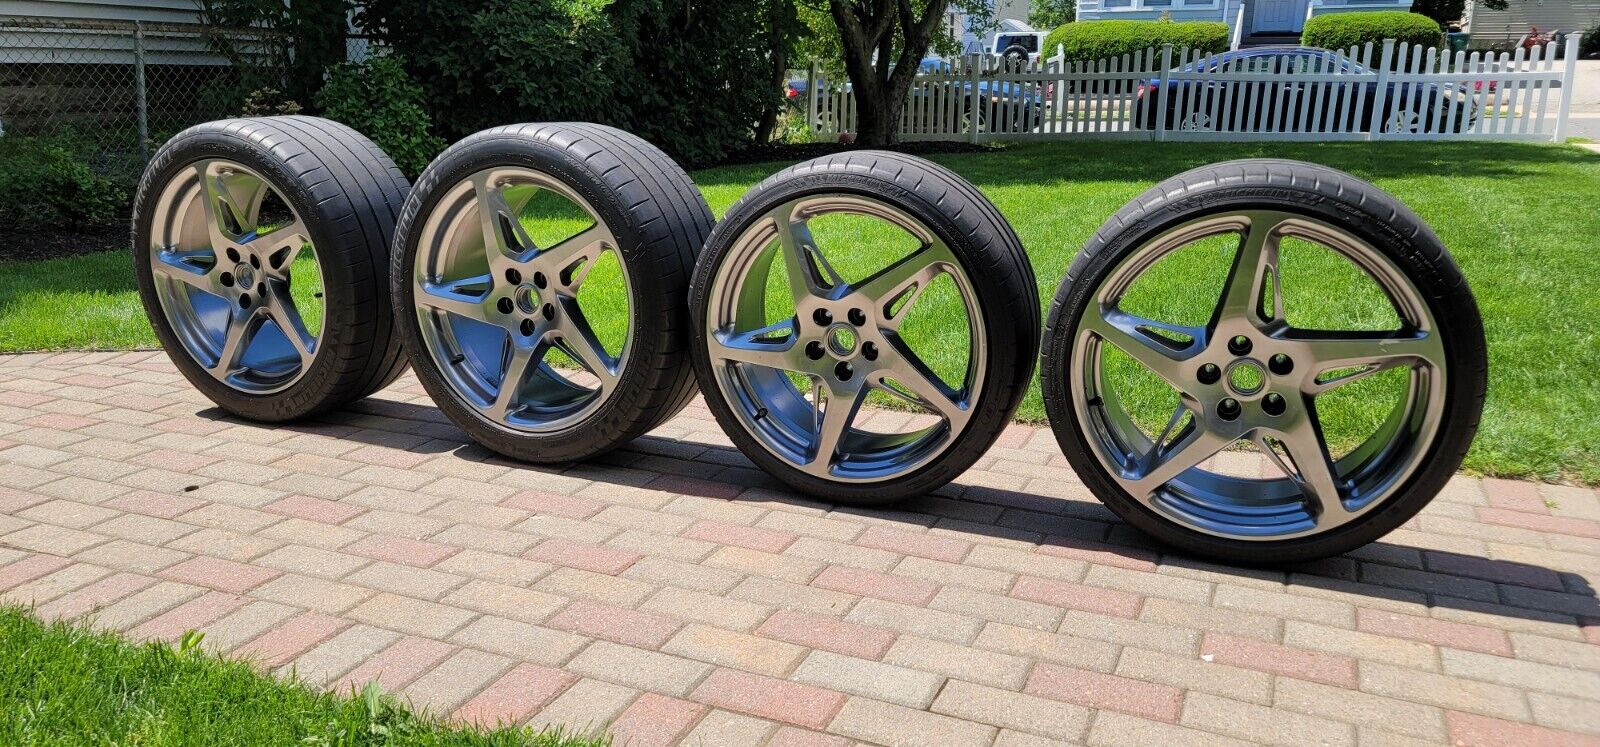 Ferrari 458 wheels and tire